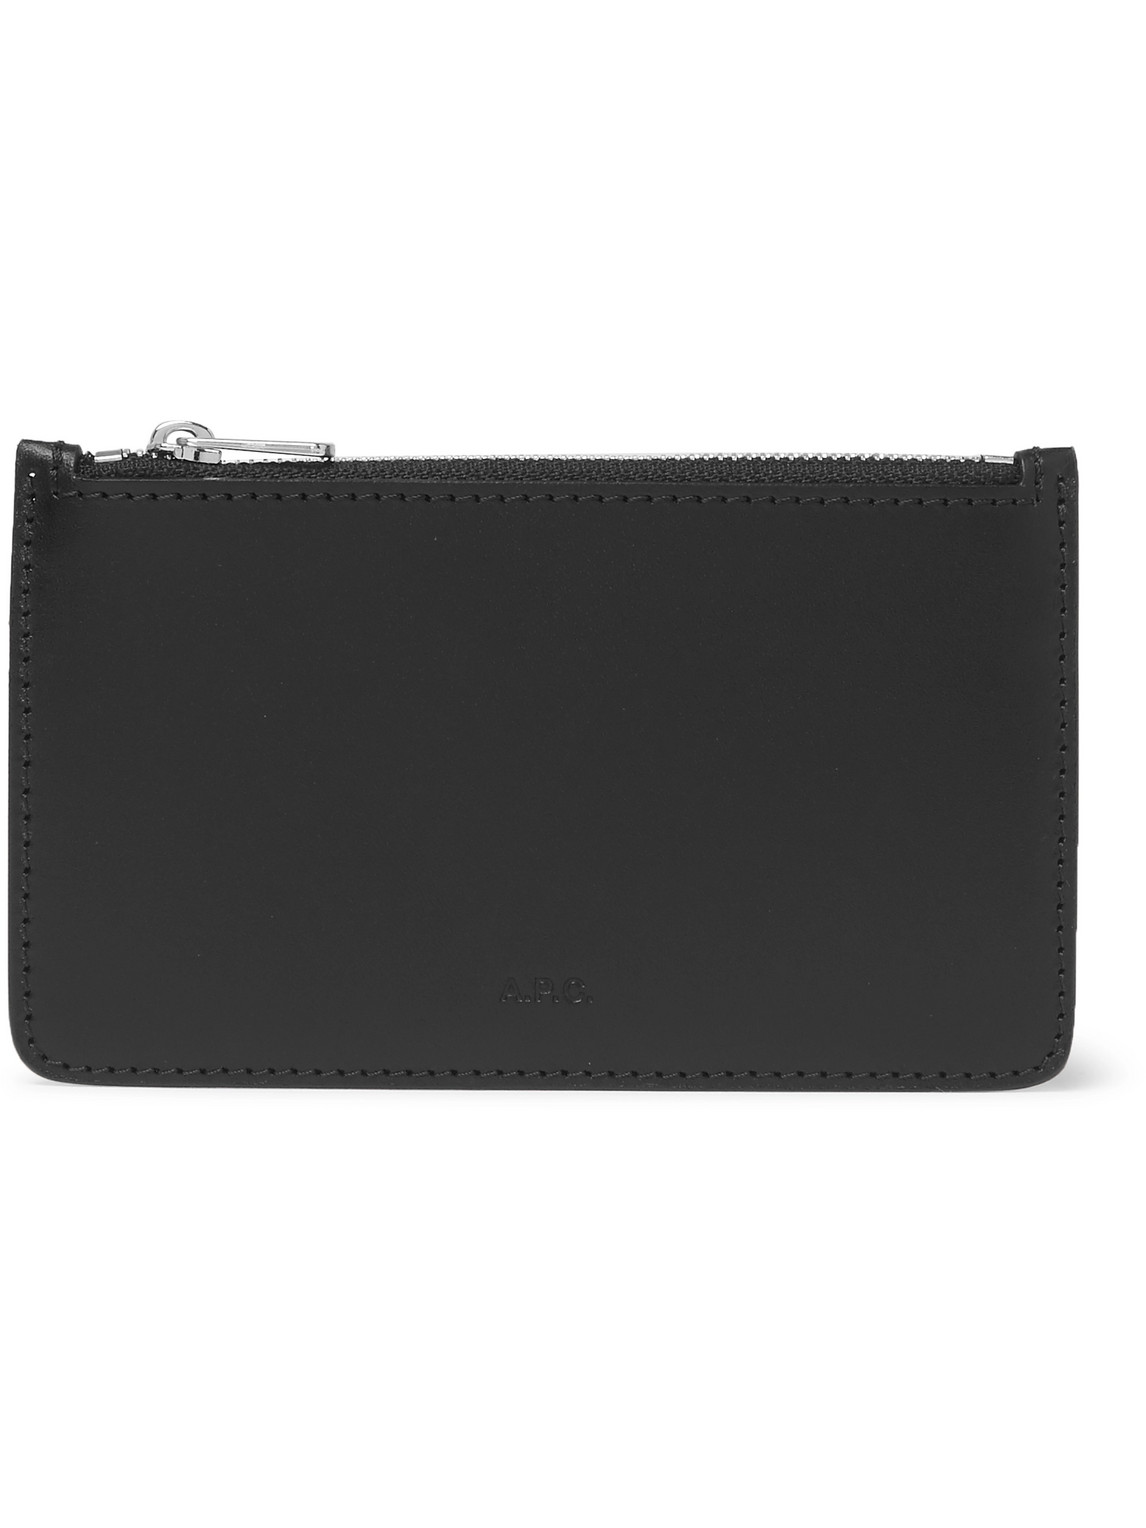 Apc Walter Leather Zipped Cardholder In Black